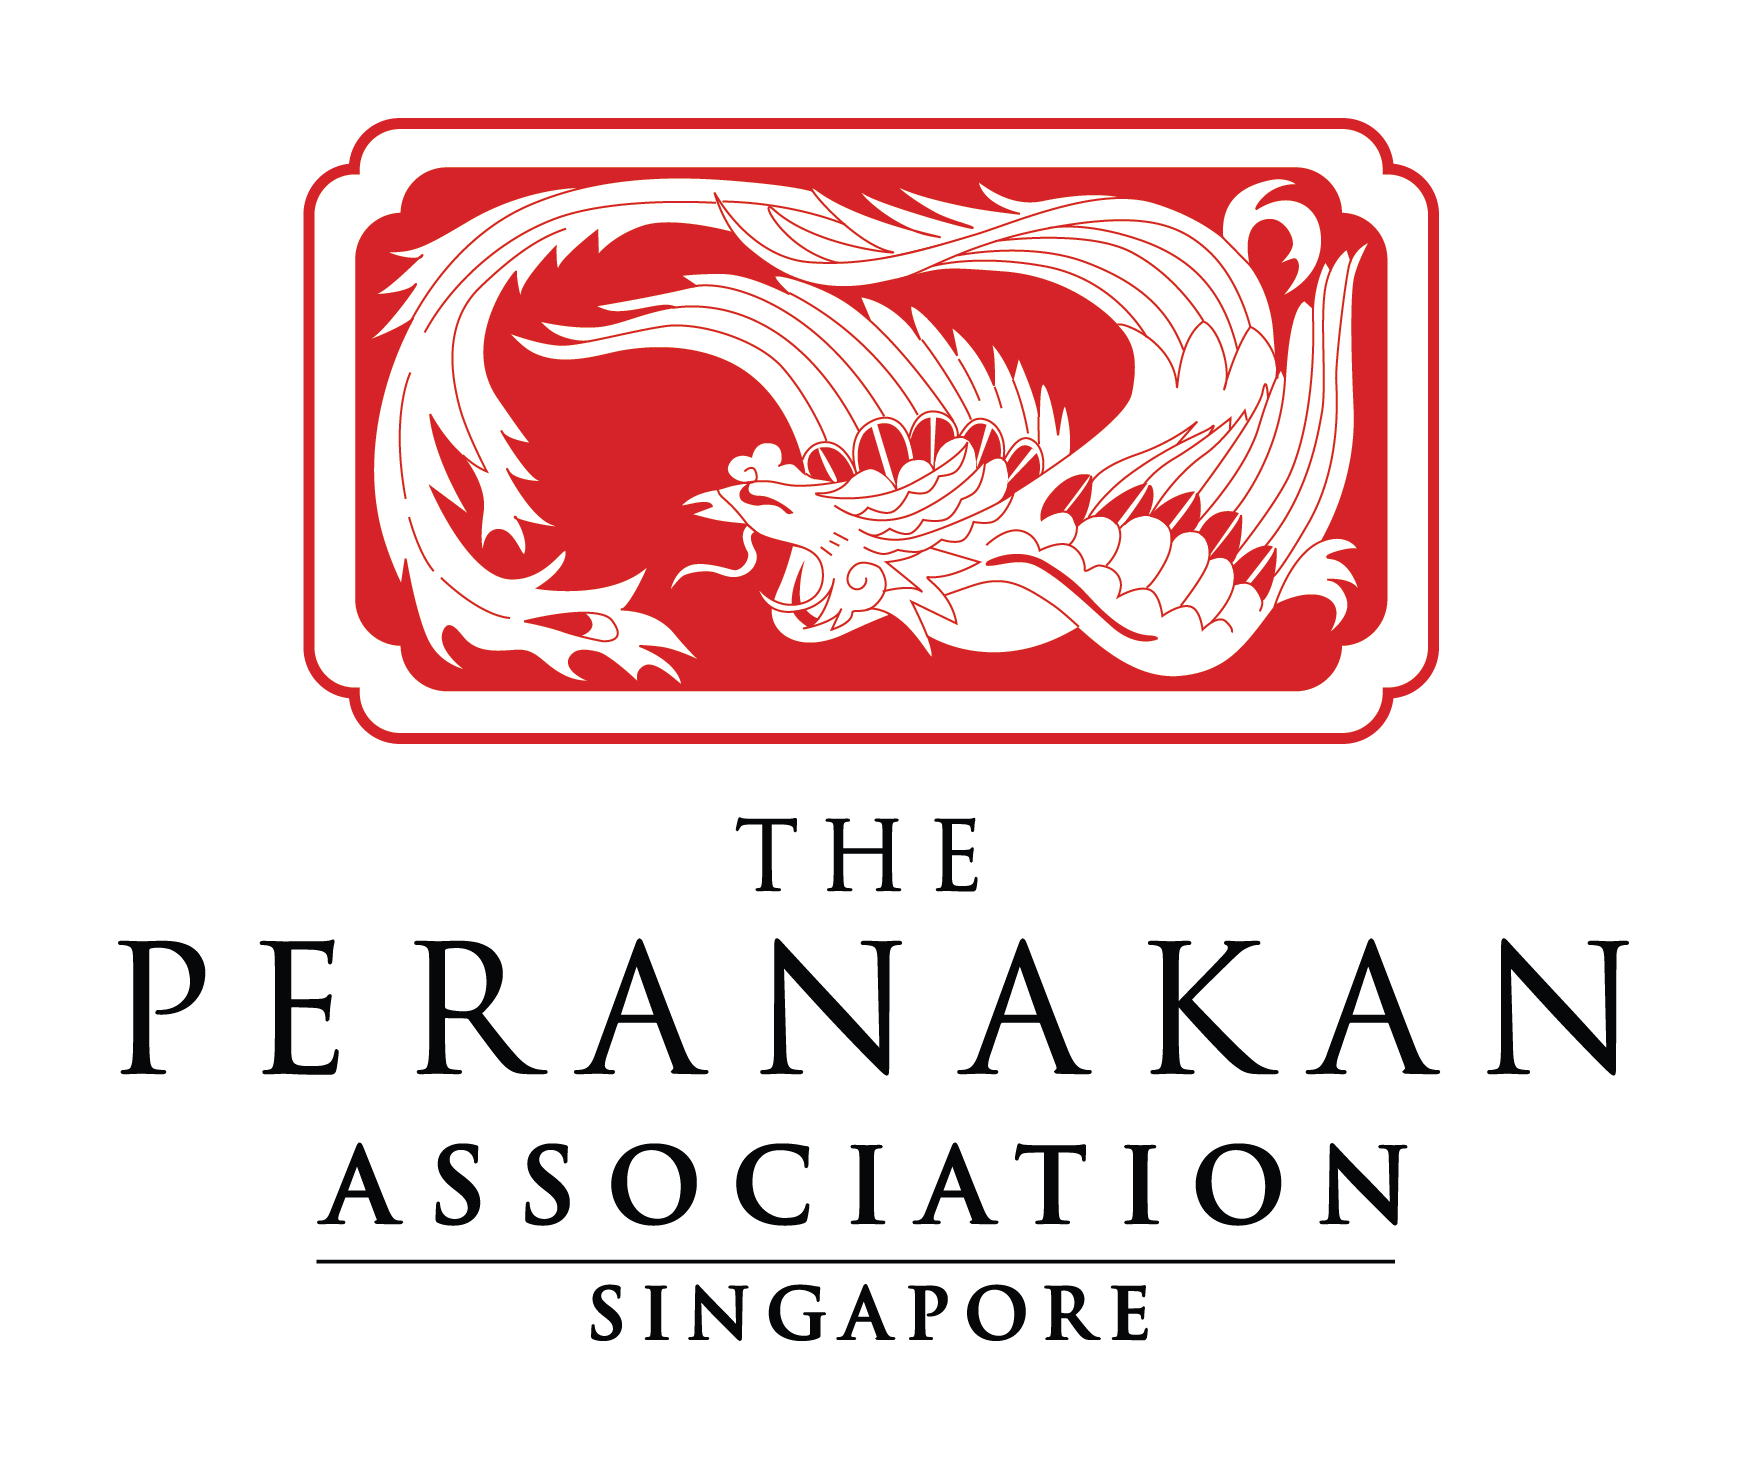 The Peranakan Association Singapore